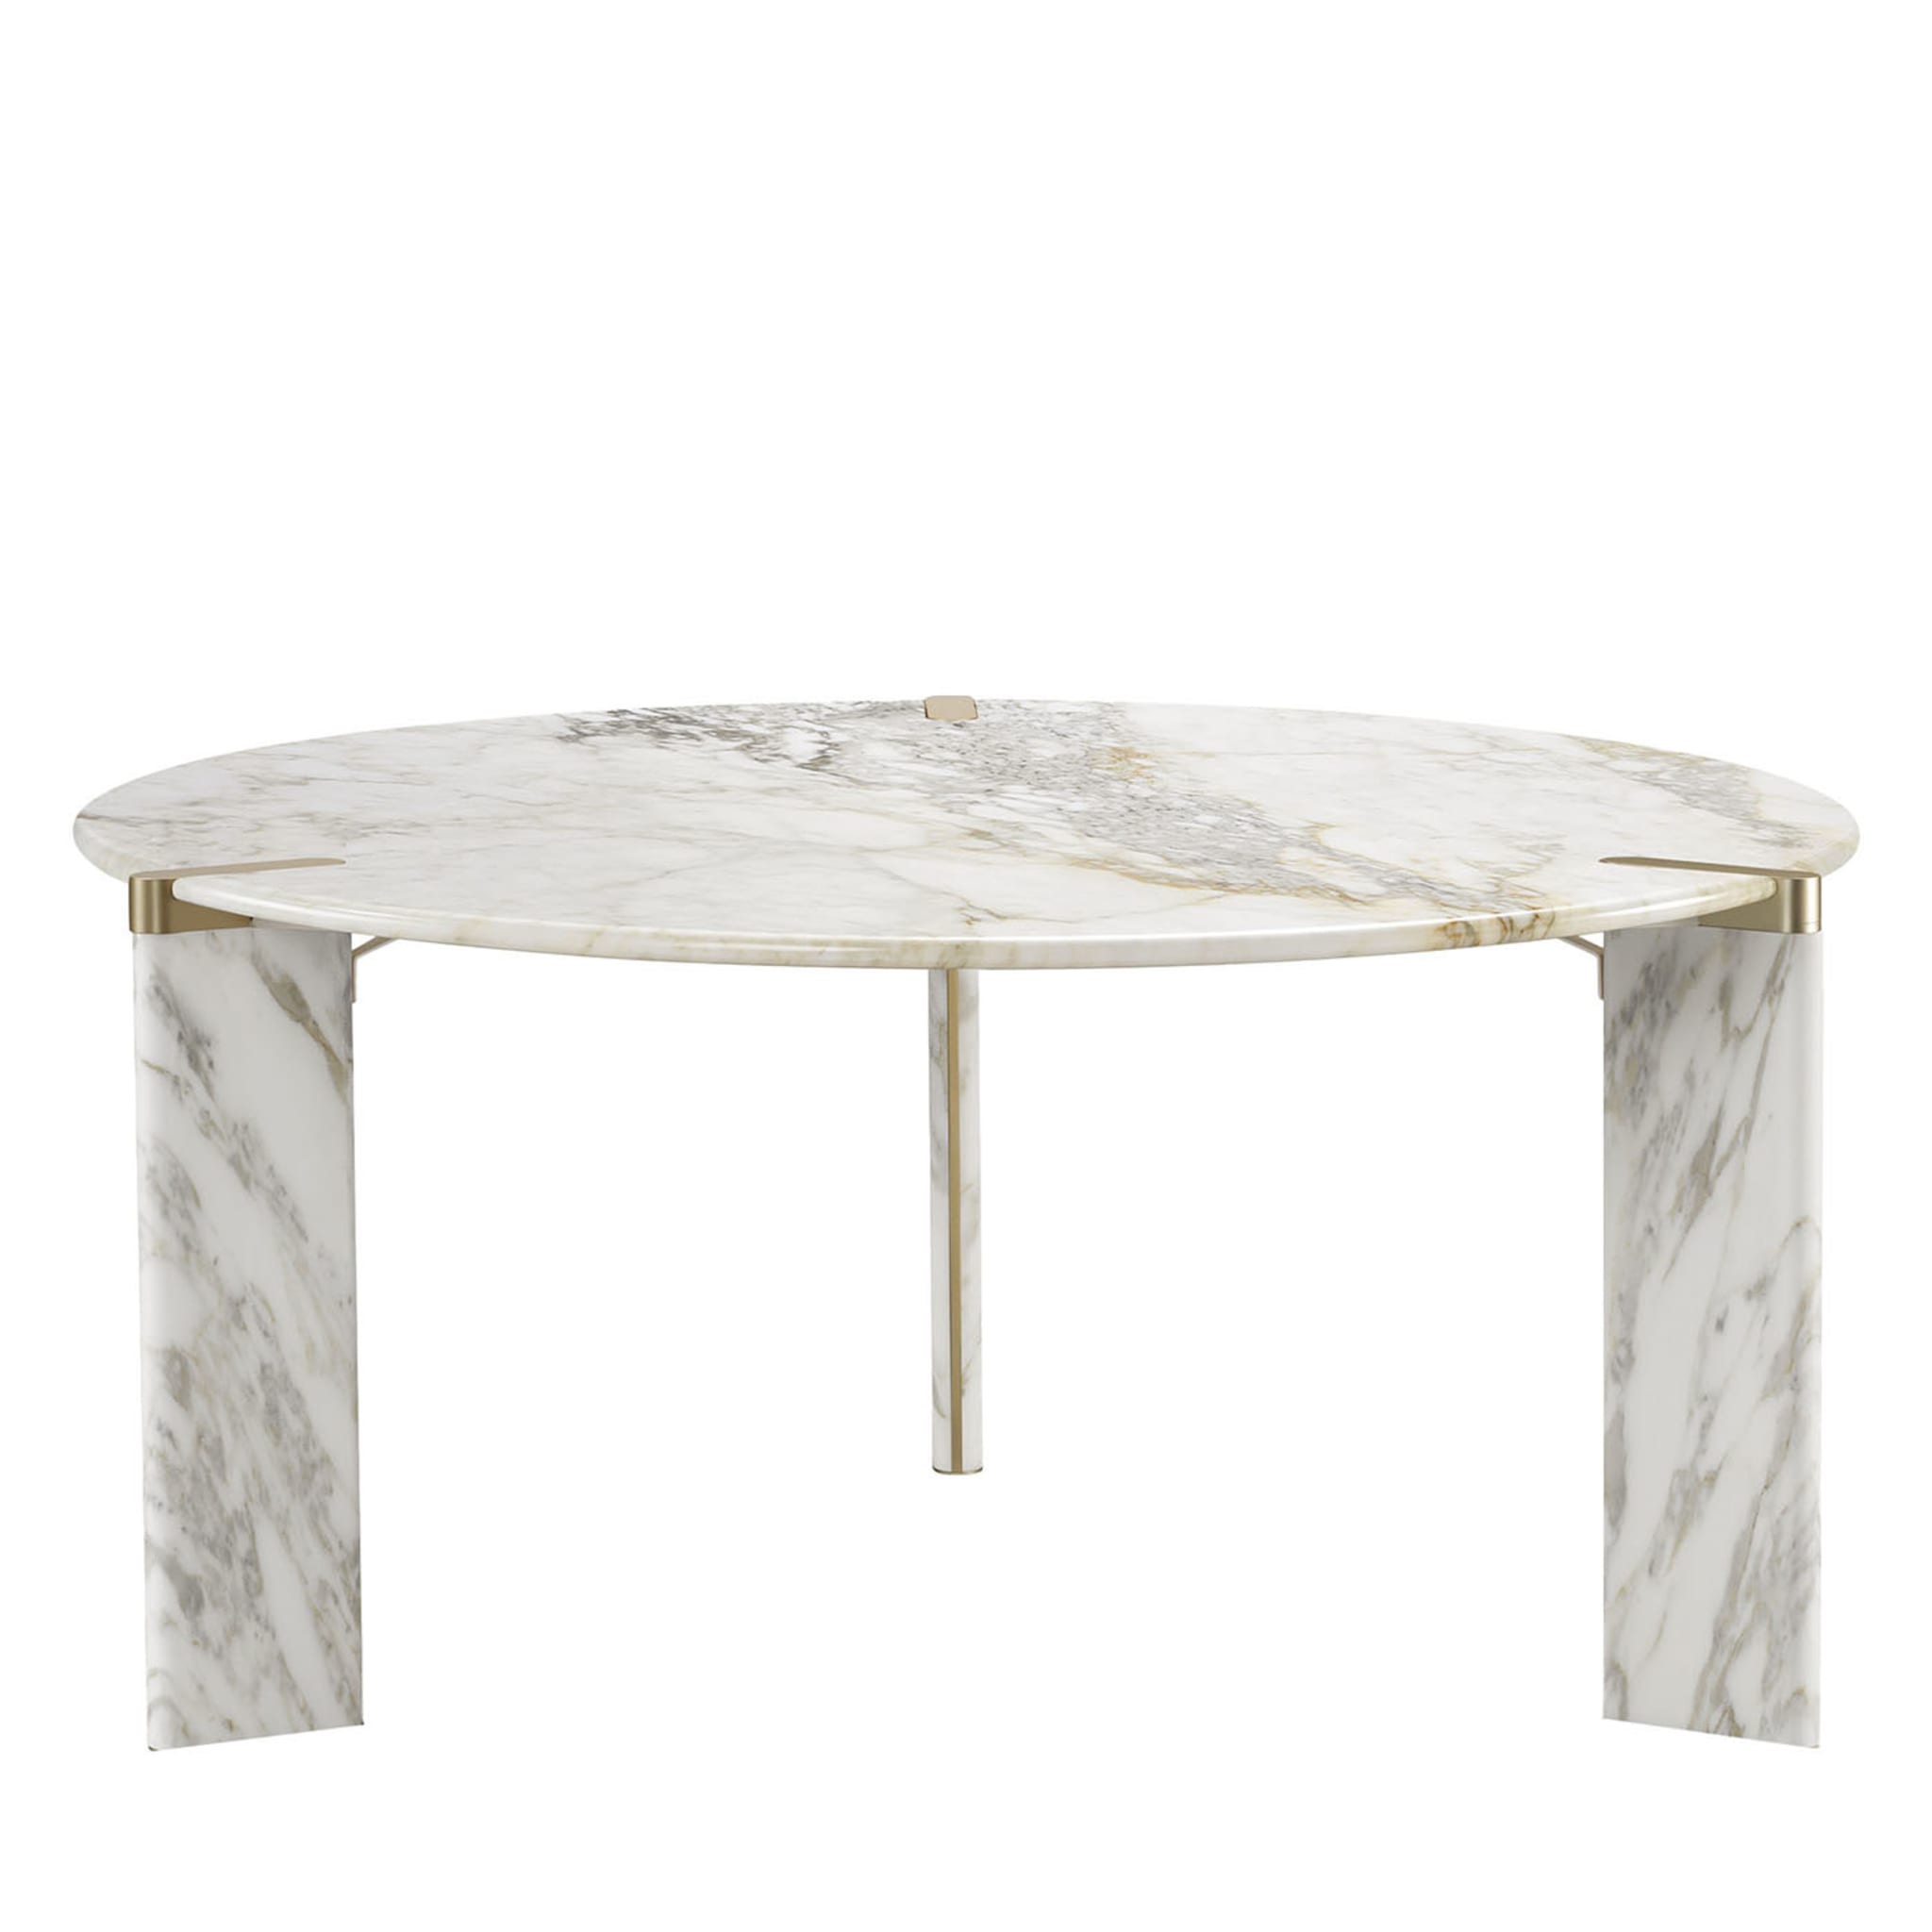 Ottanta Round White Dining Table by Lorenza Bozzoli - Main view